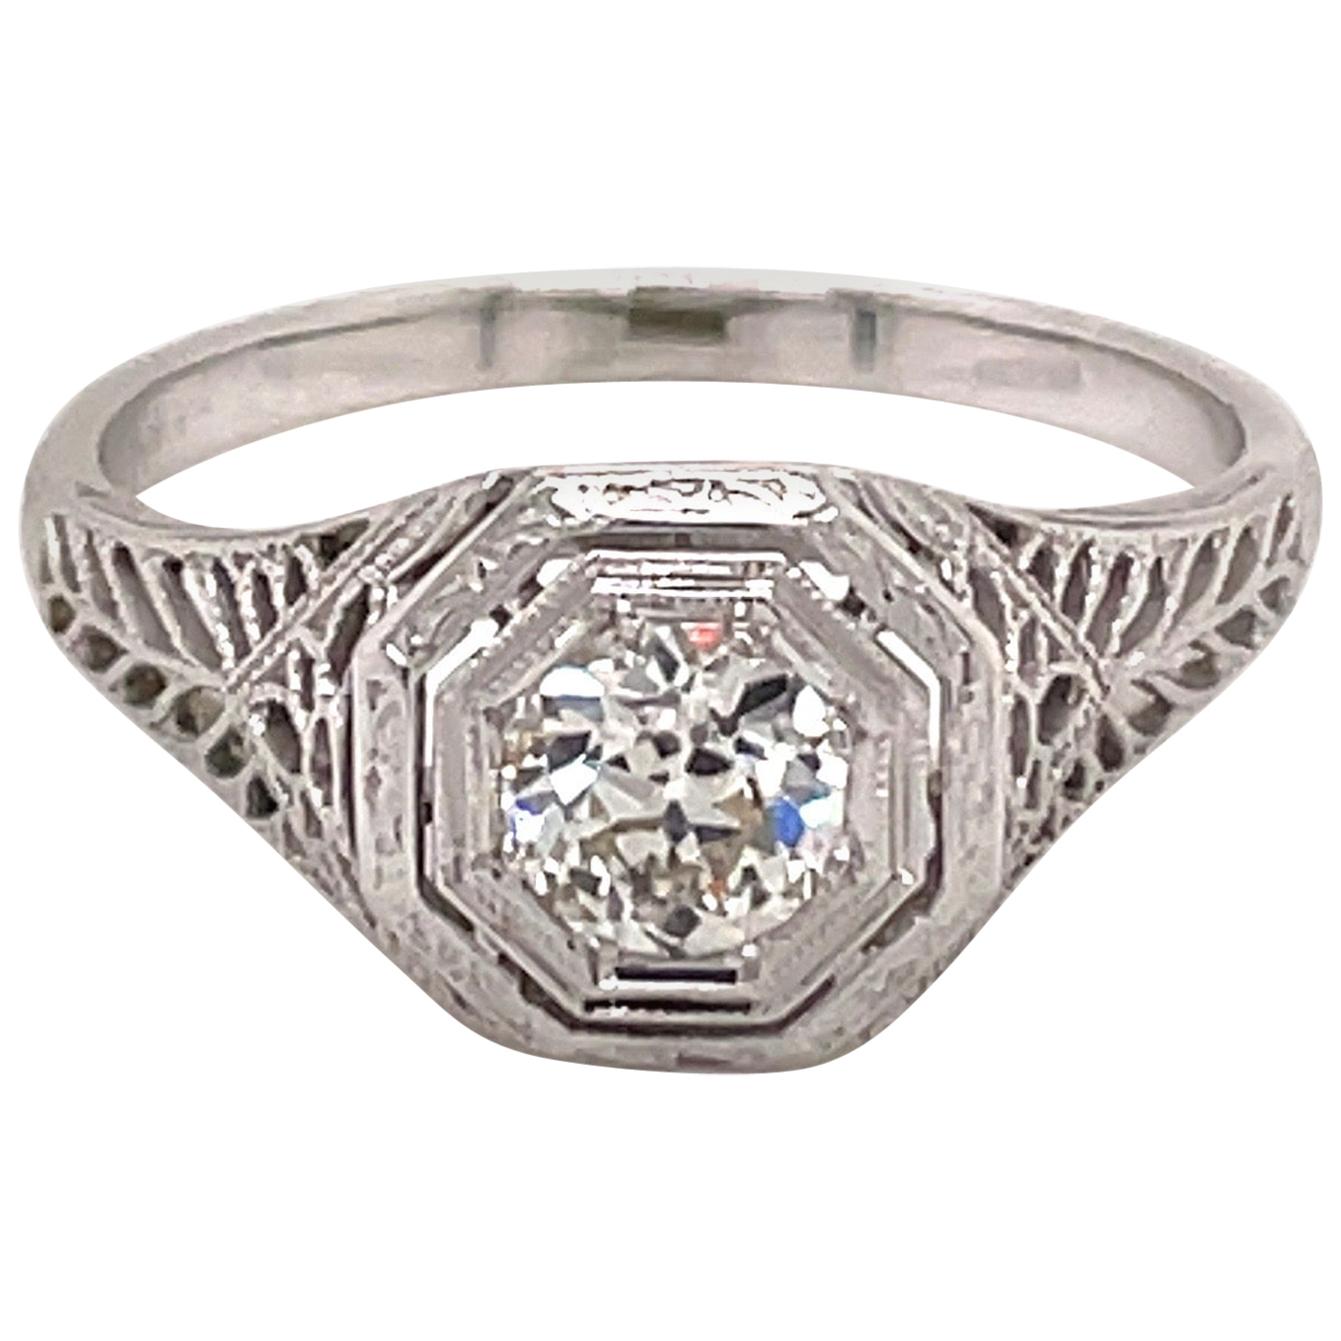 1930s 18 Karat White .50 Carat European Cut Diamond Filigree Art Deco Ring